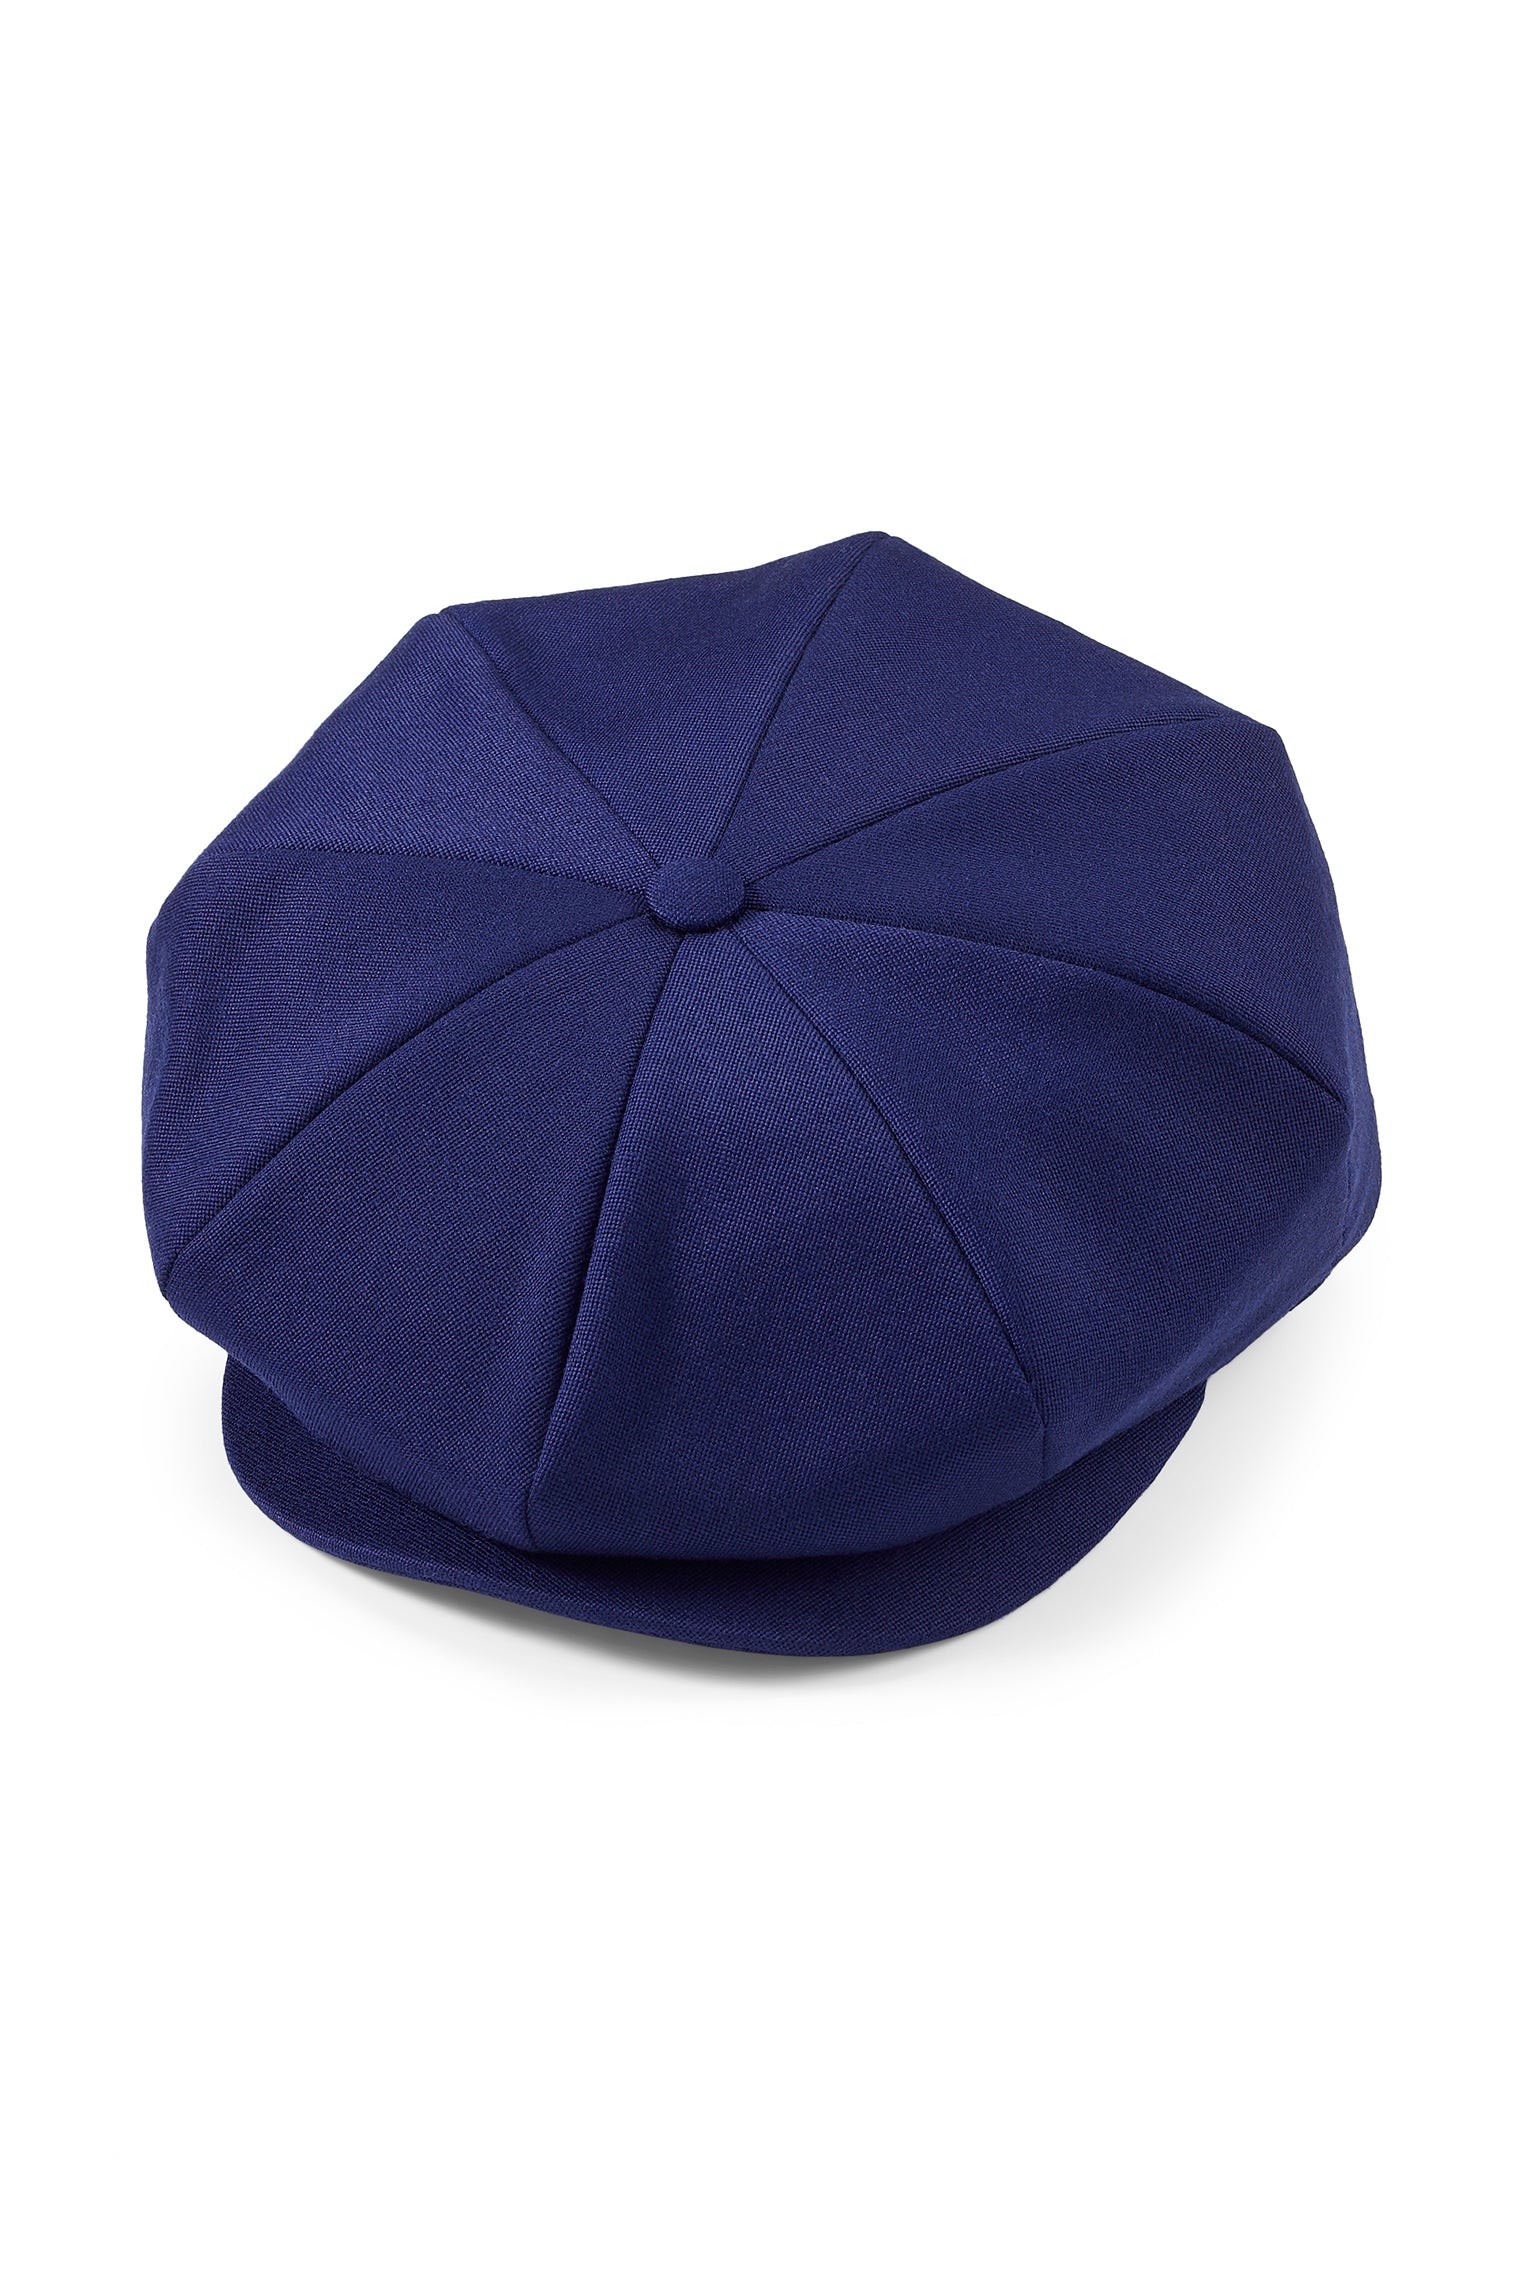 Tremelo Dark Blue Bakerboy Cap - Hats for Tall People - Lock & Co. Hatters London UK